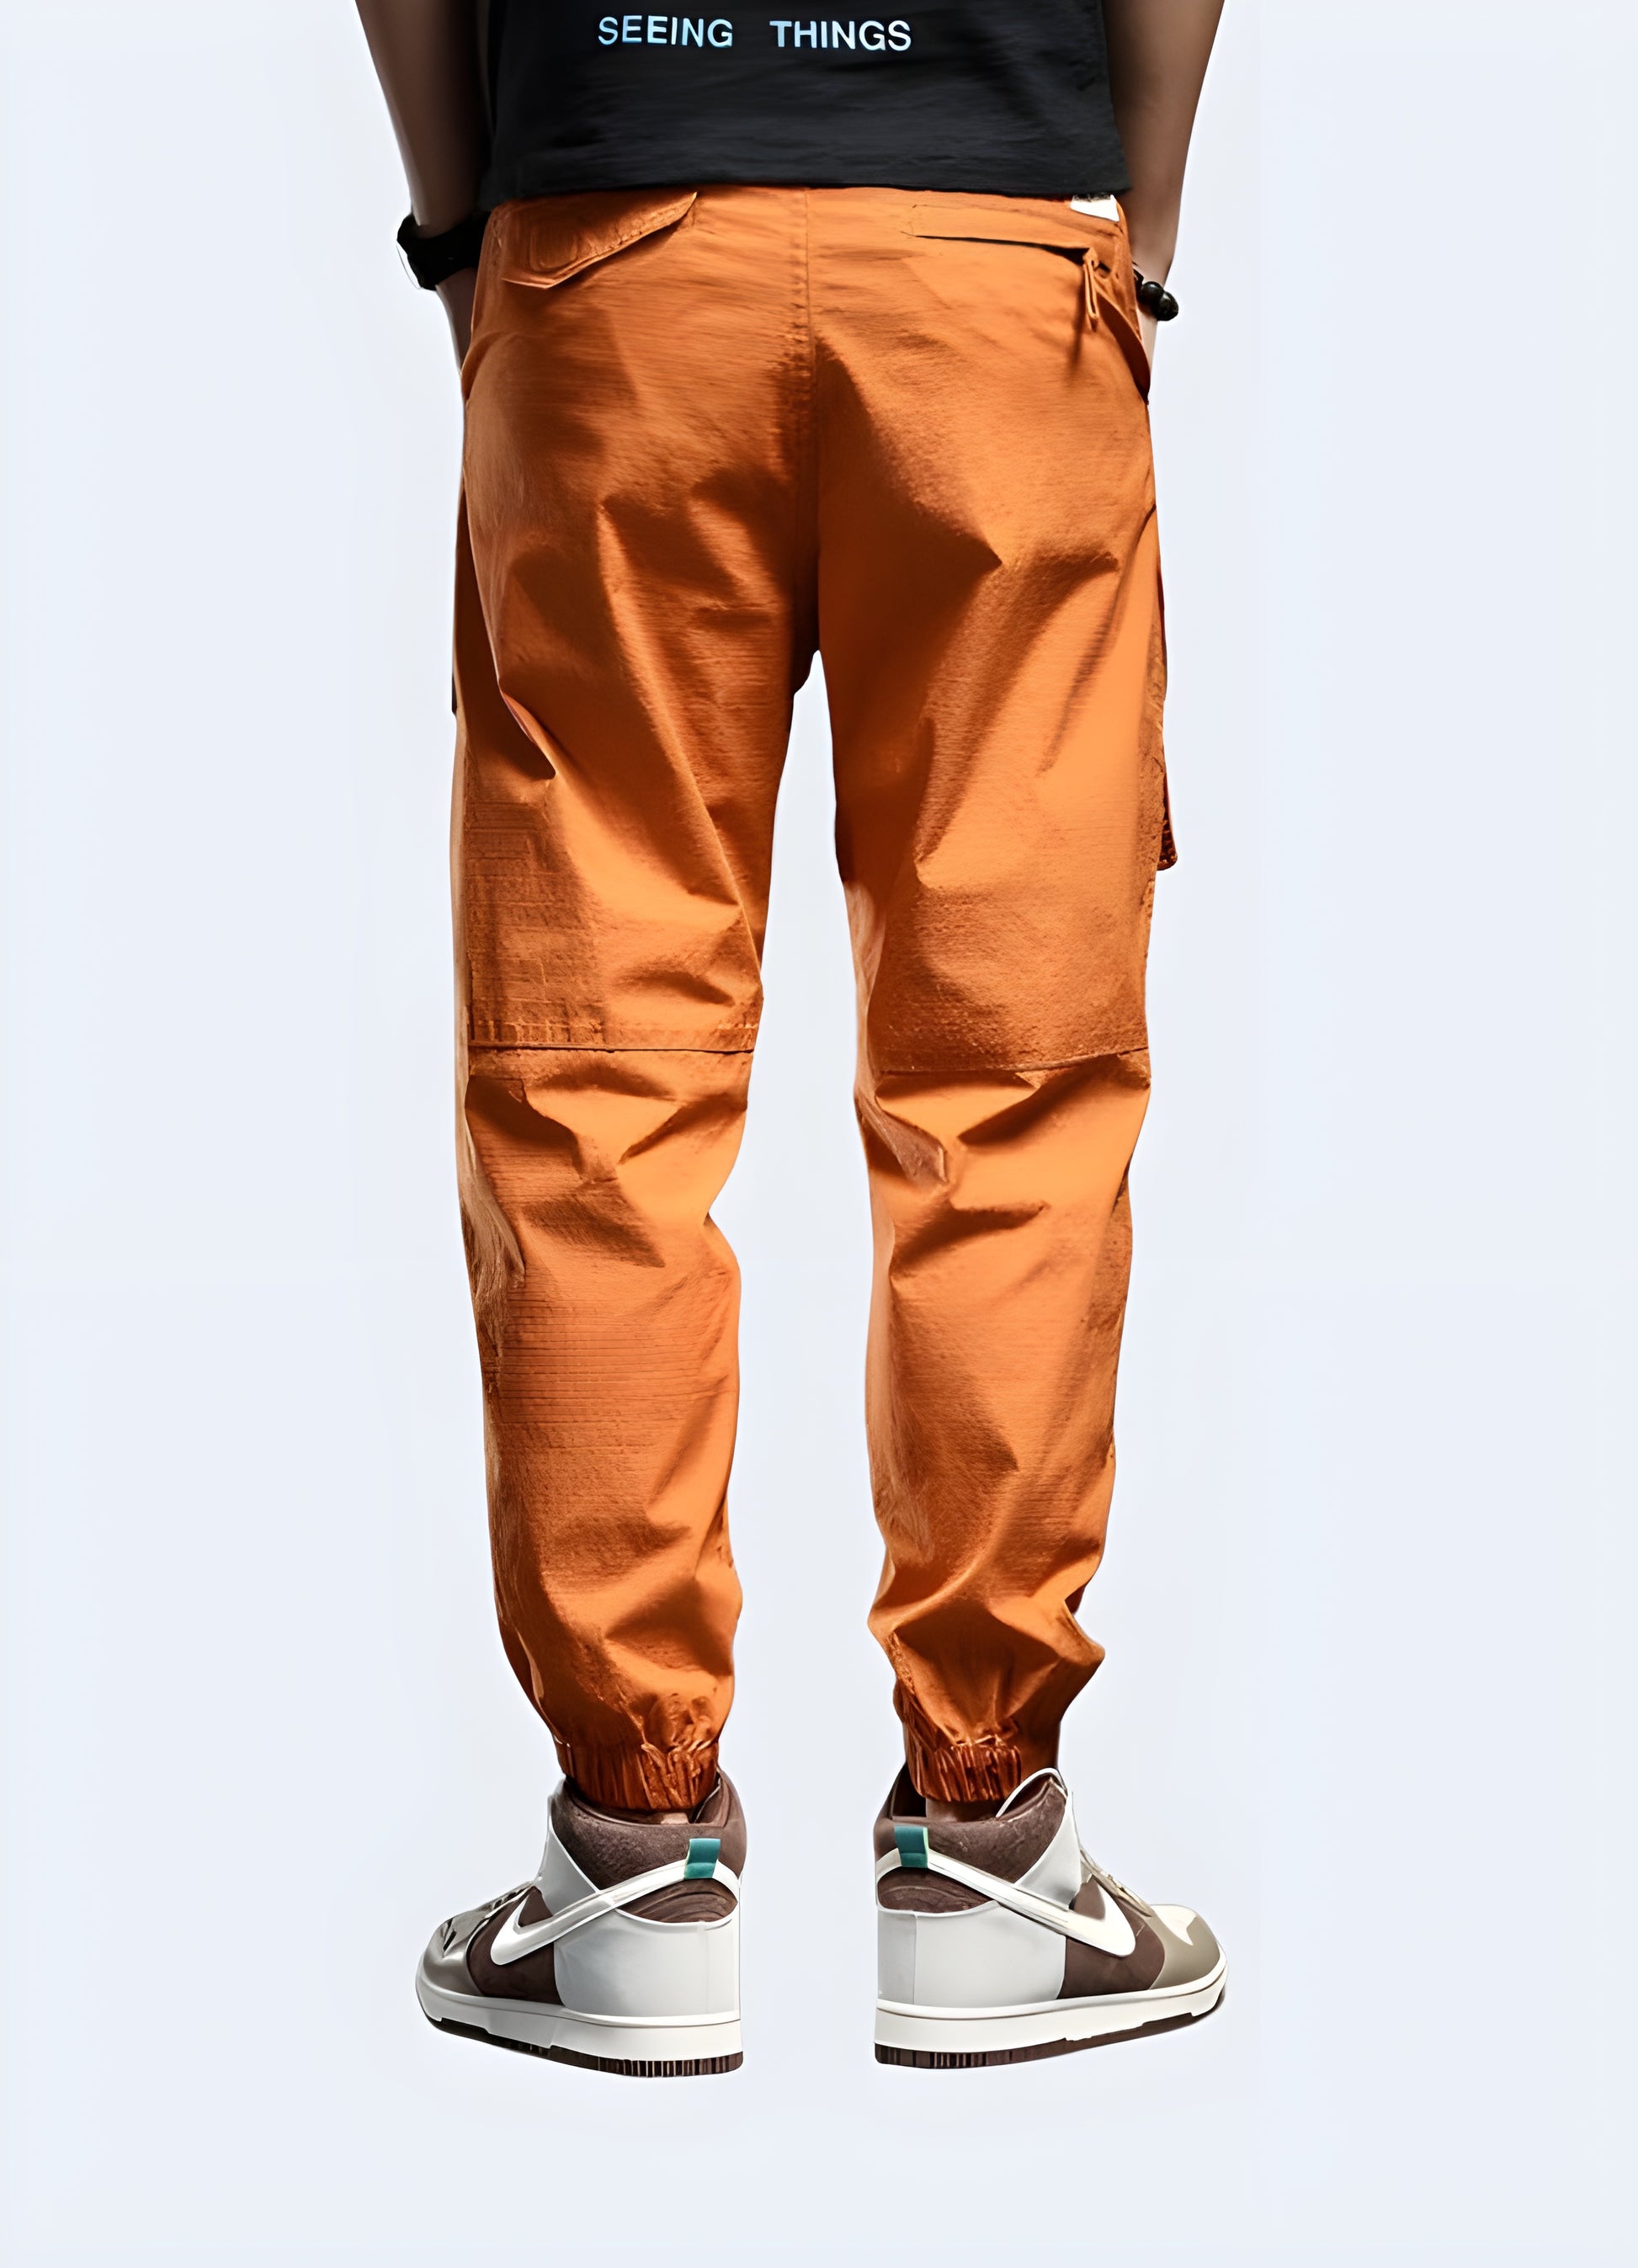 Futuristic orange techwear pants men wearing back view.